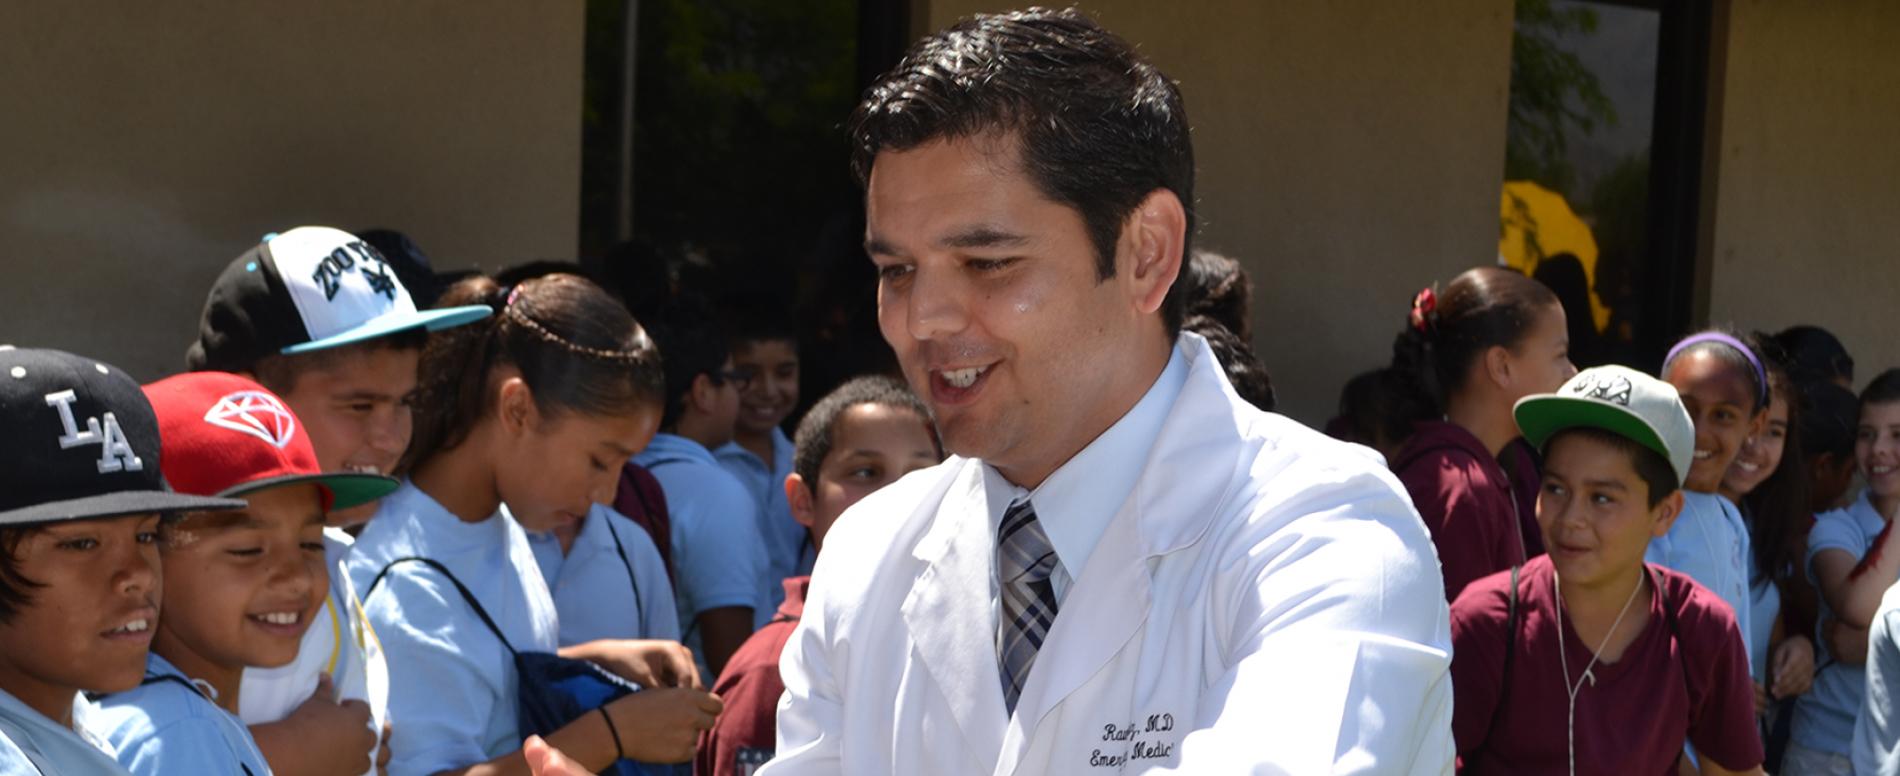 CHC Chairman Ruiz visits Dr. Carreon Academy in Indio, California